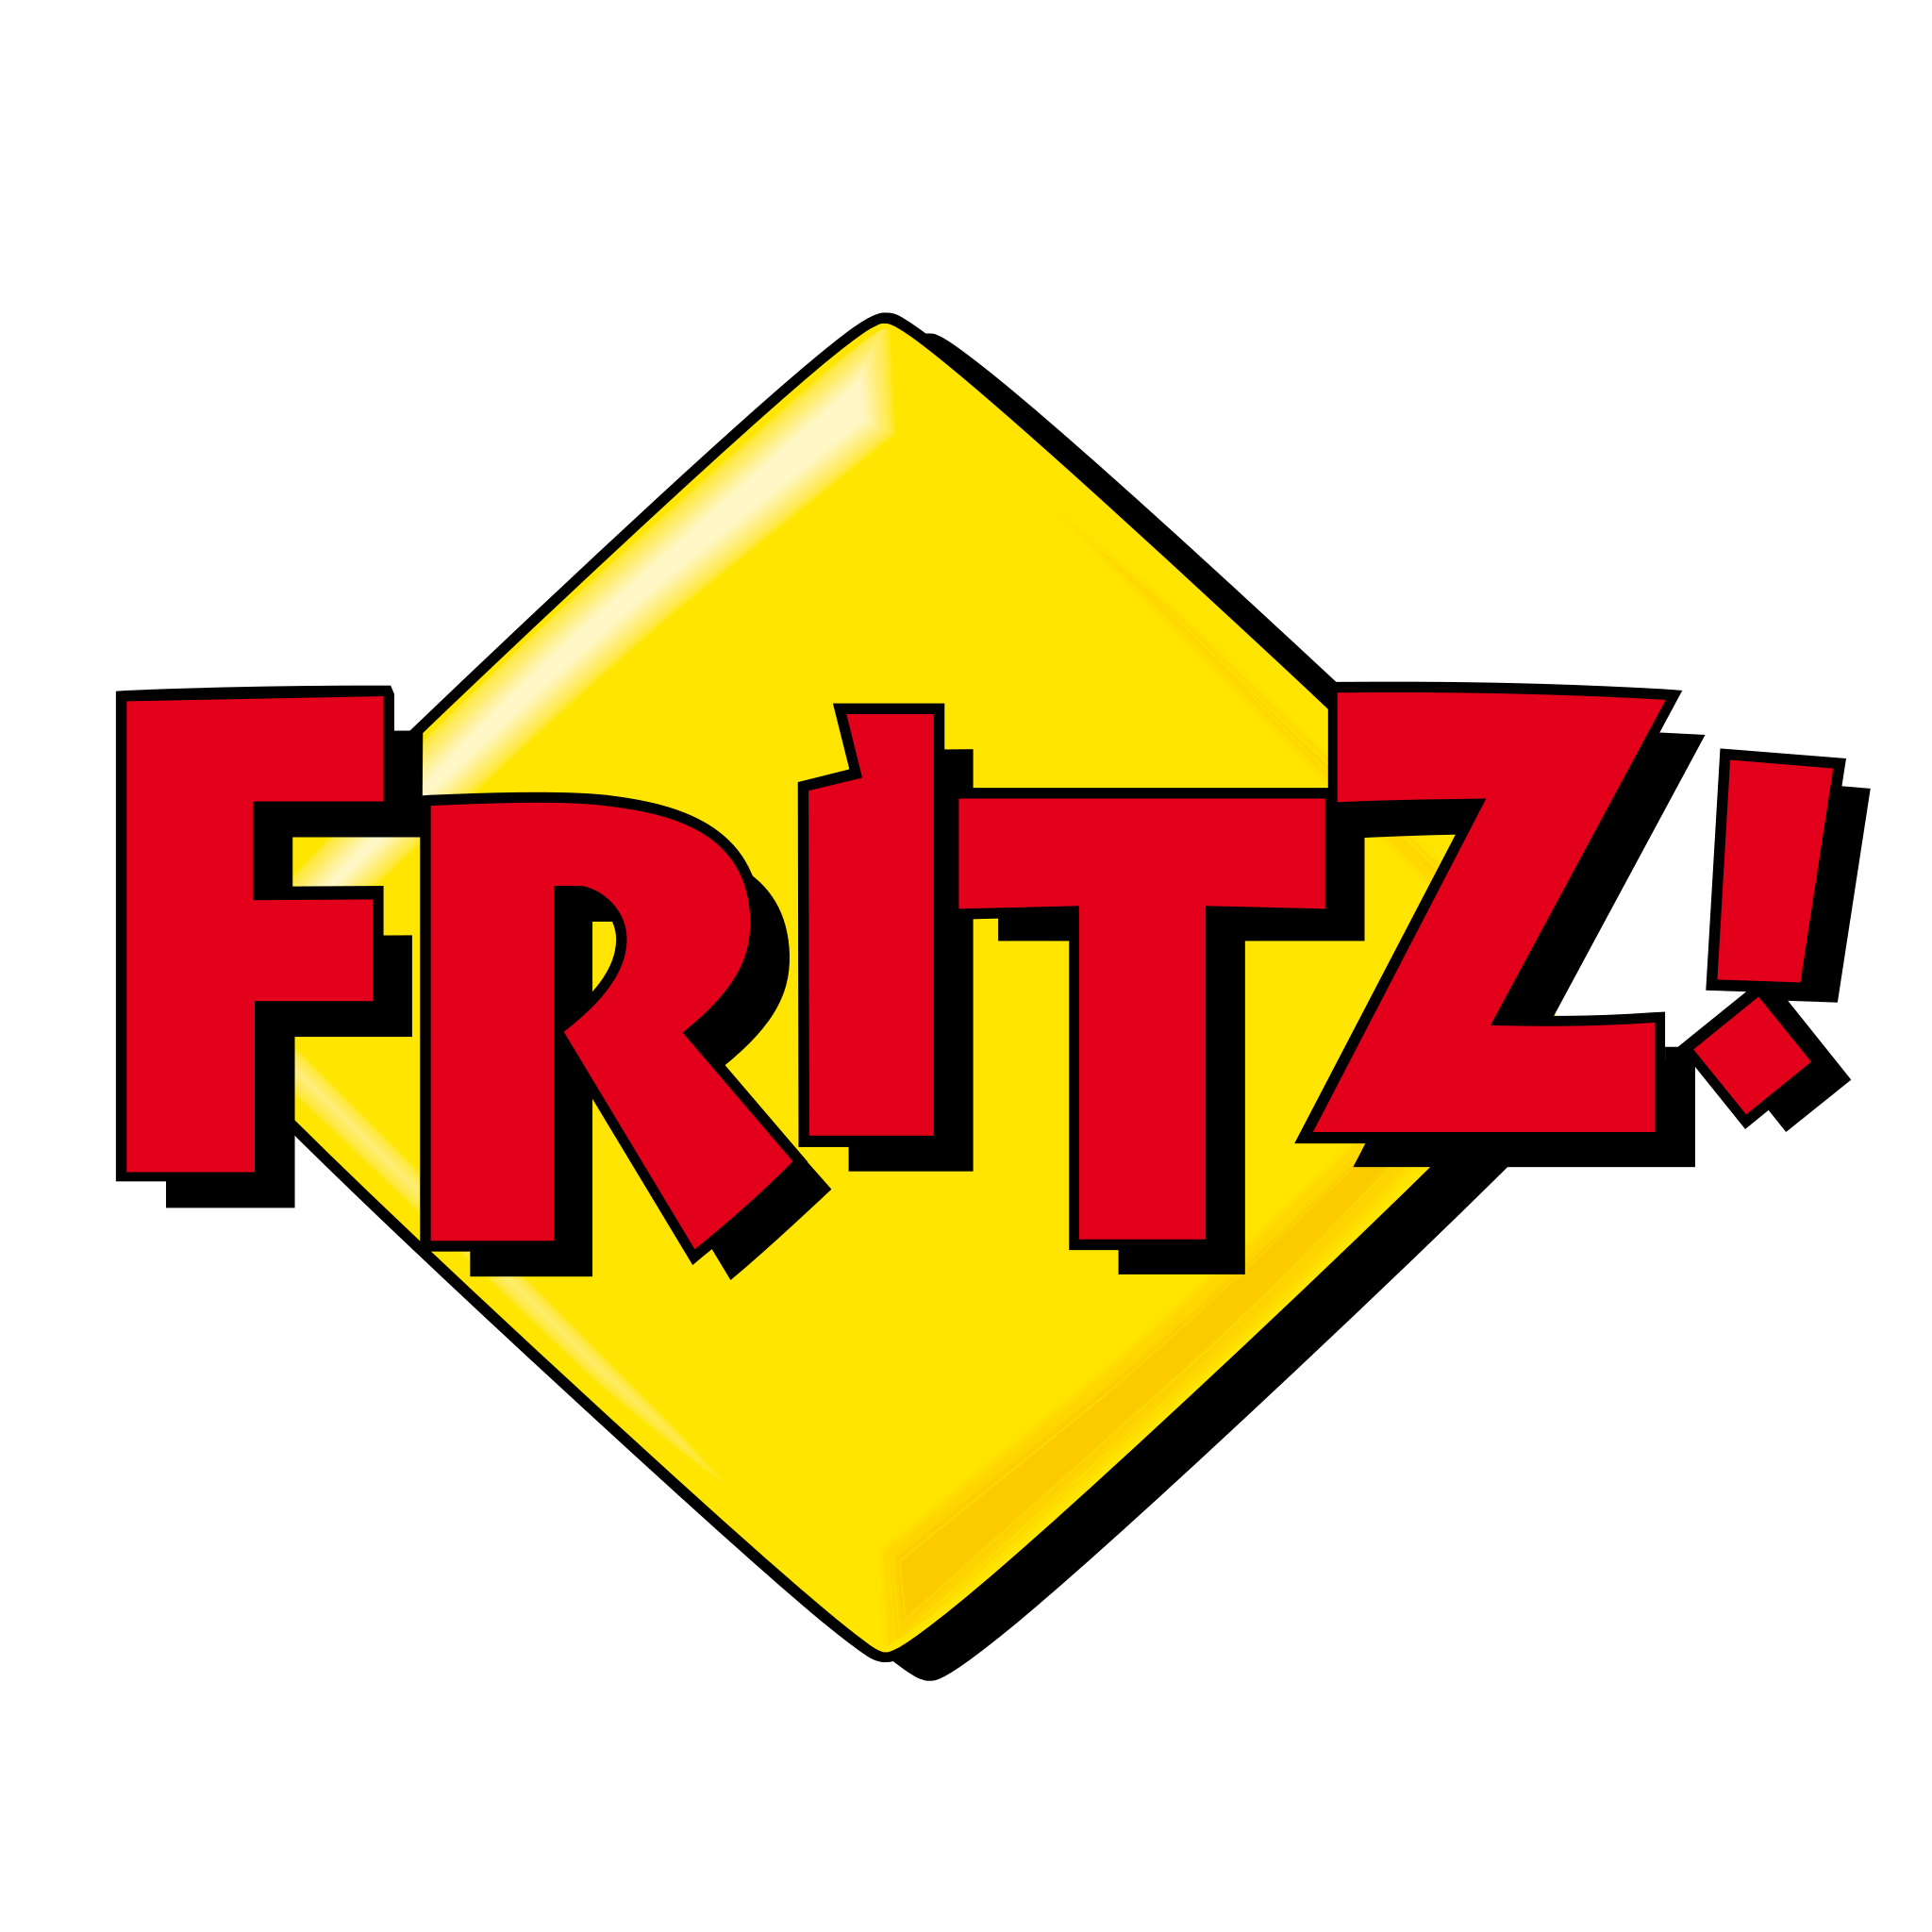 Fritz!